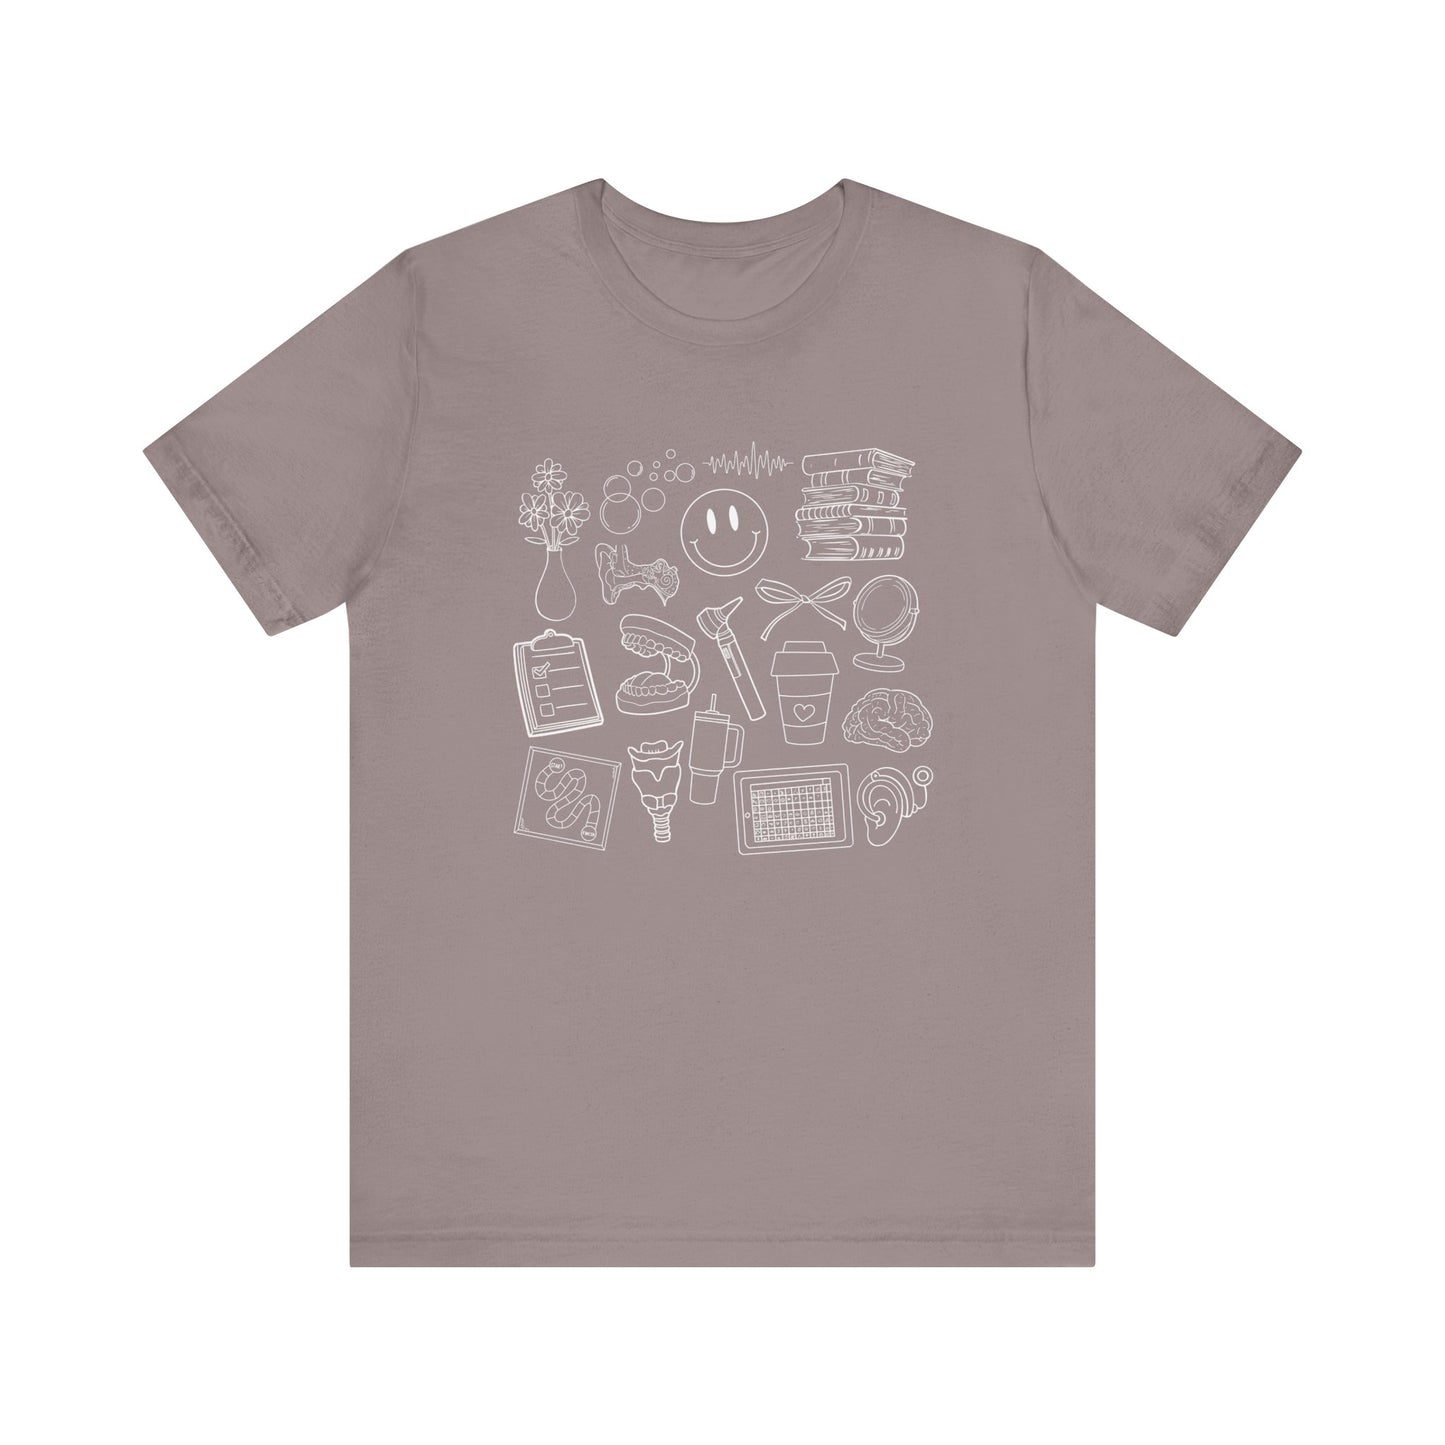 Speech-Language-Hearing Jersey T-Shirt